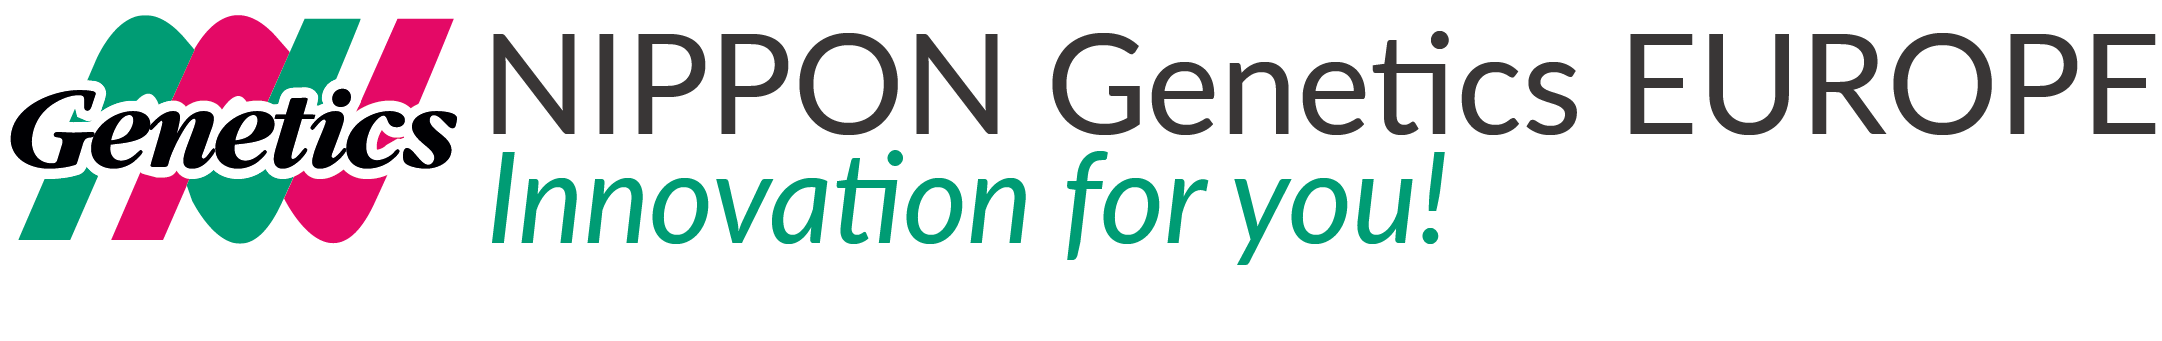 Nippon Genetics Europe